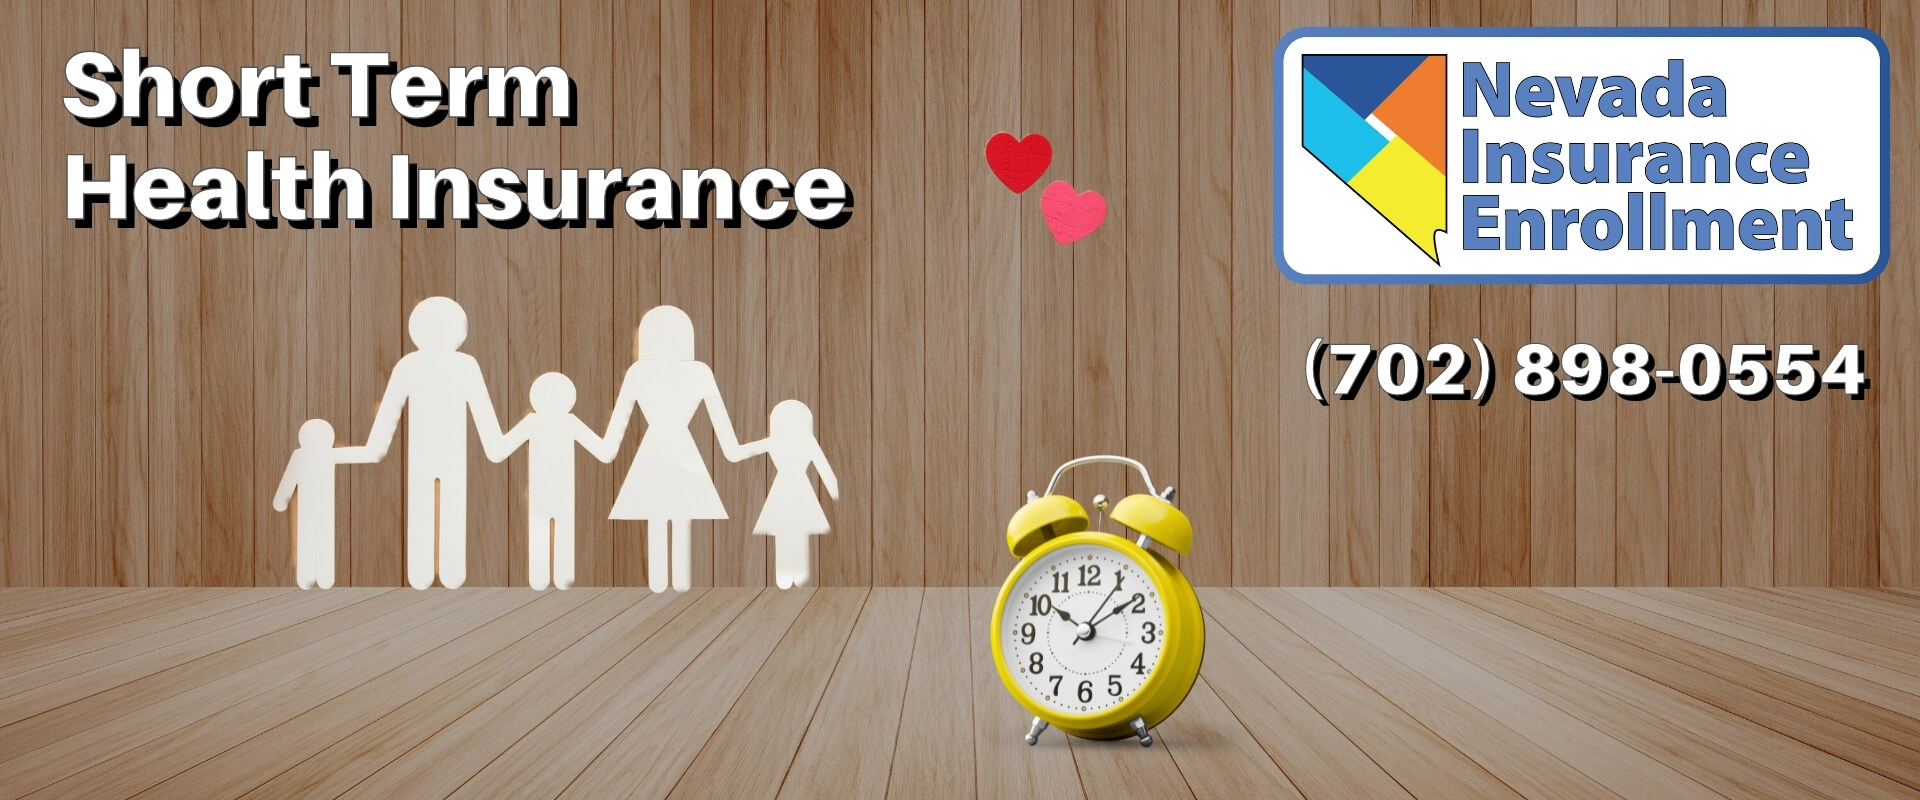 Short Term Health Insurance MAIN page image